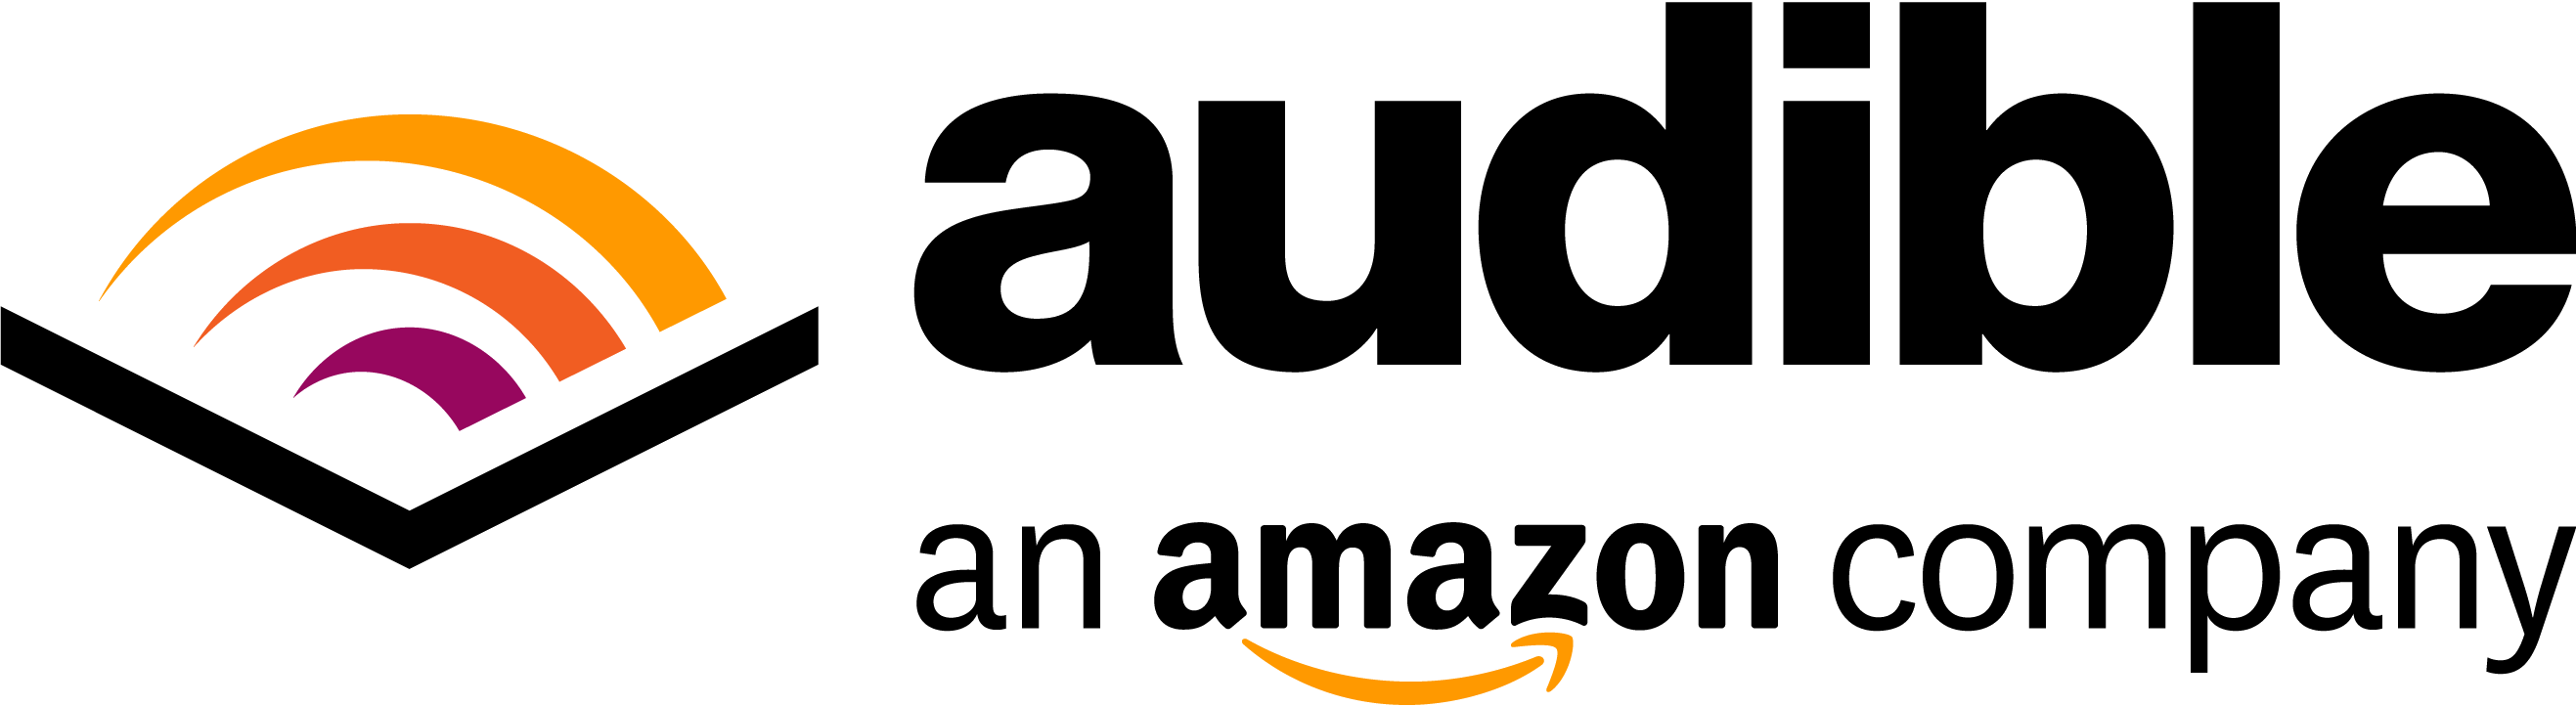 Audible Logo White - Audible Amazon (2634x722), Png Download